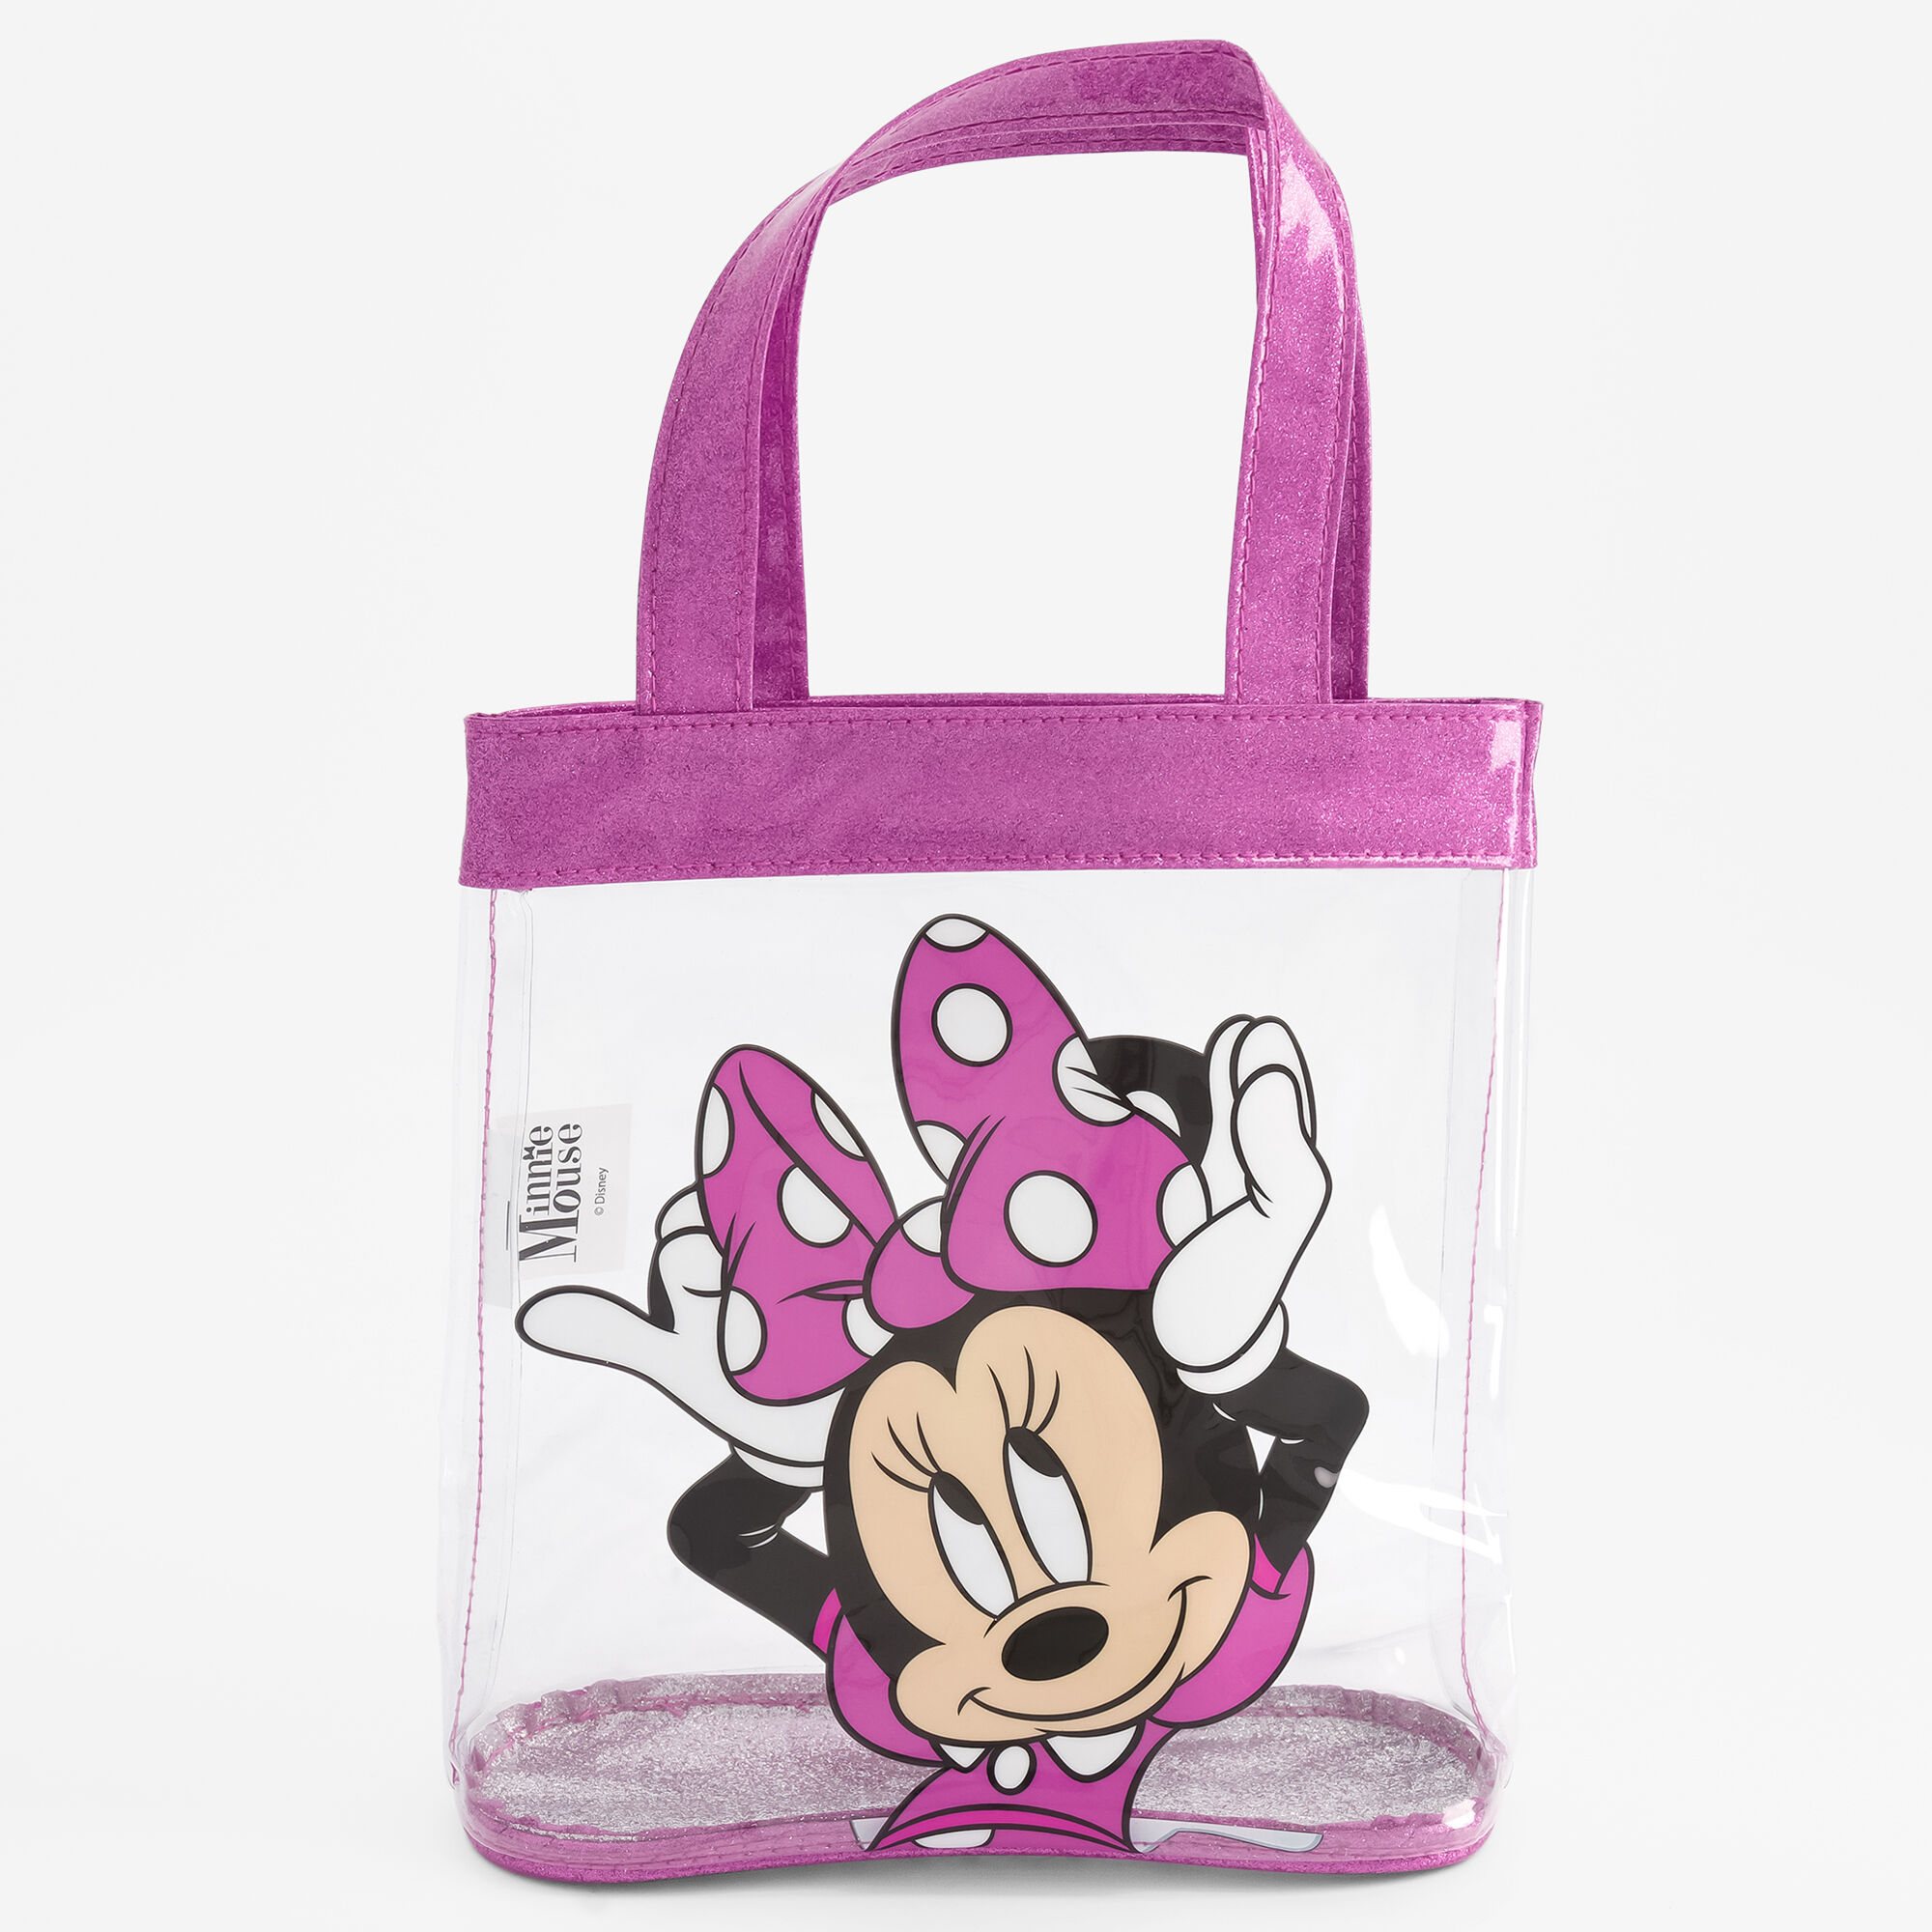 Disney Minnie Mouse Handbag Purse